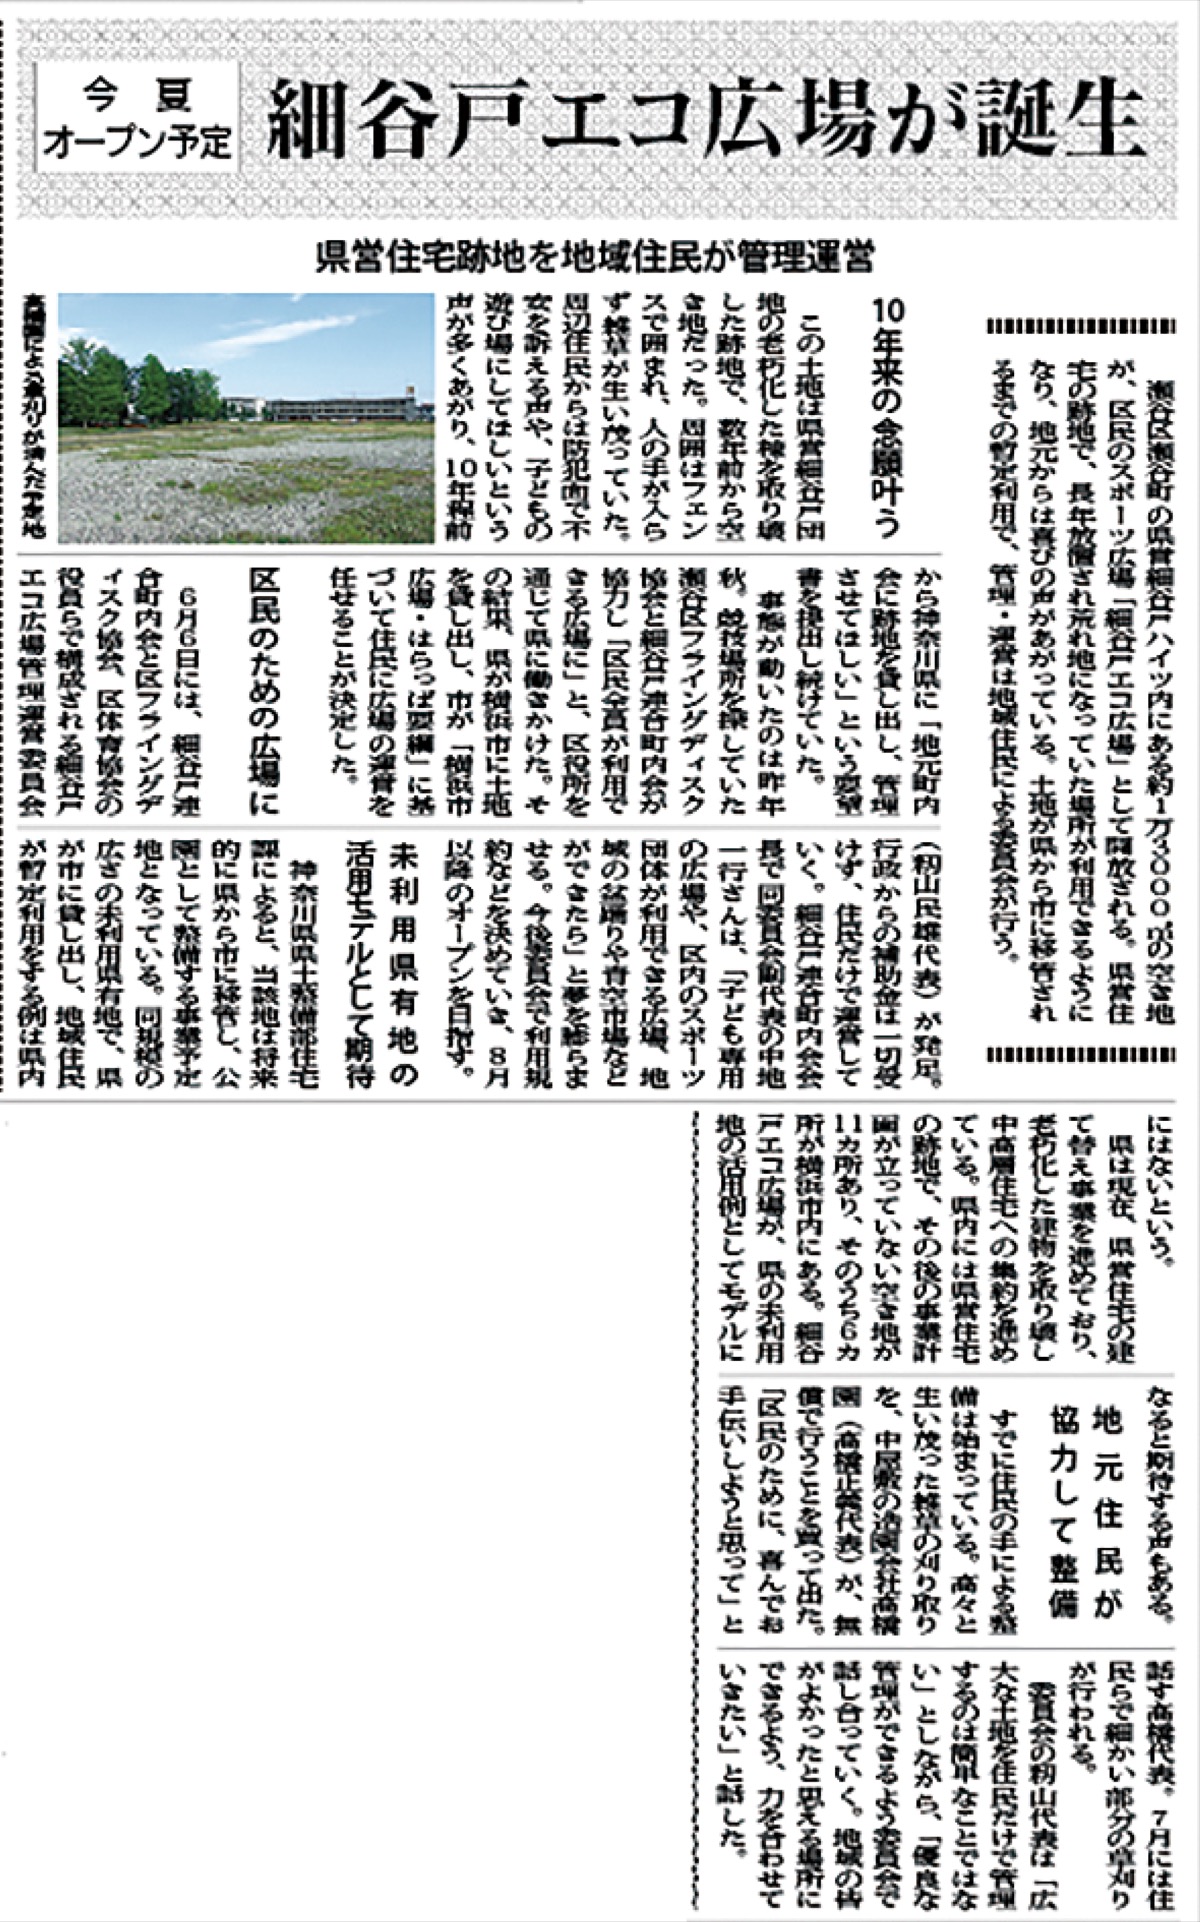 【Web限定記事】プレイバック瀬谷㉒ 細谷戸エコ広場が誕生 09年６月を振り返る